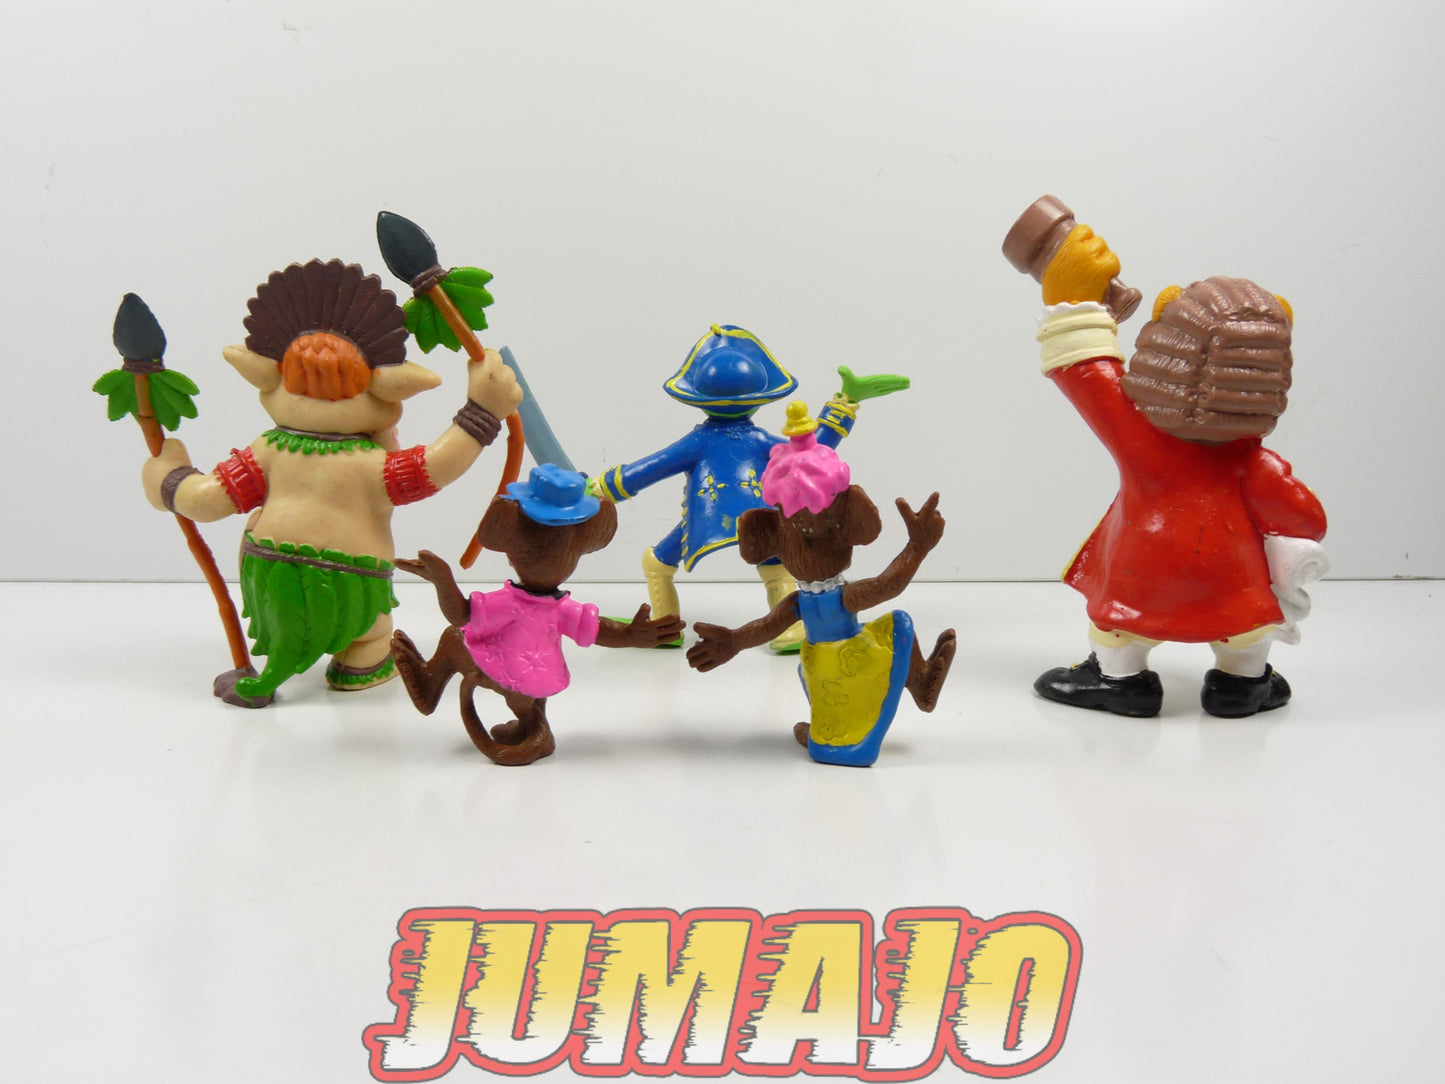 FIG153 : 5 figurines "Muppet Show" Treasure island MINILAND 9.5cm : Fozzie & Kermit